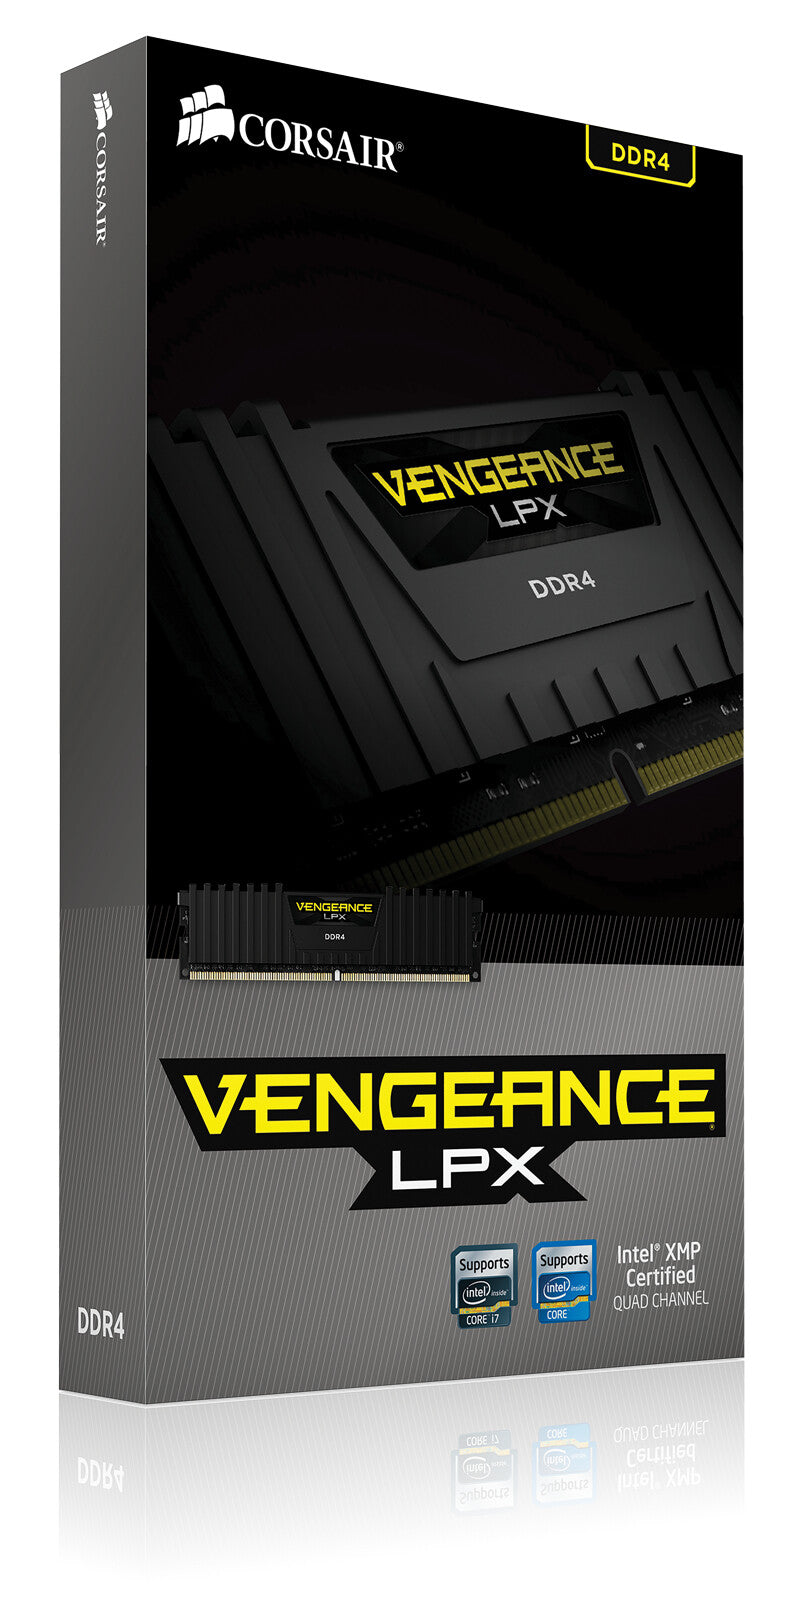 Corsair Vengeance LPX - 16 GB 2 x 8 GB DDR4 2400 MHz memory module